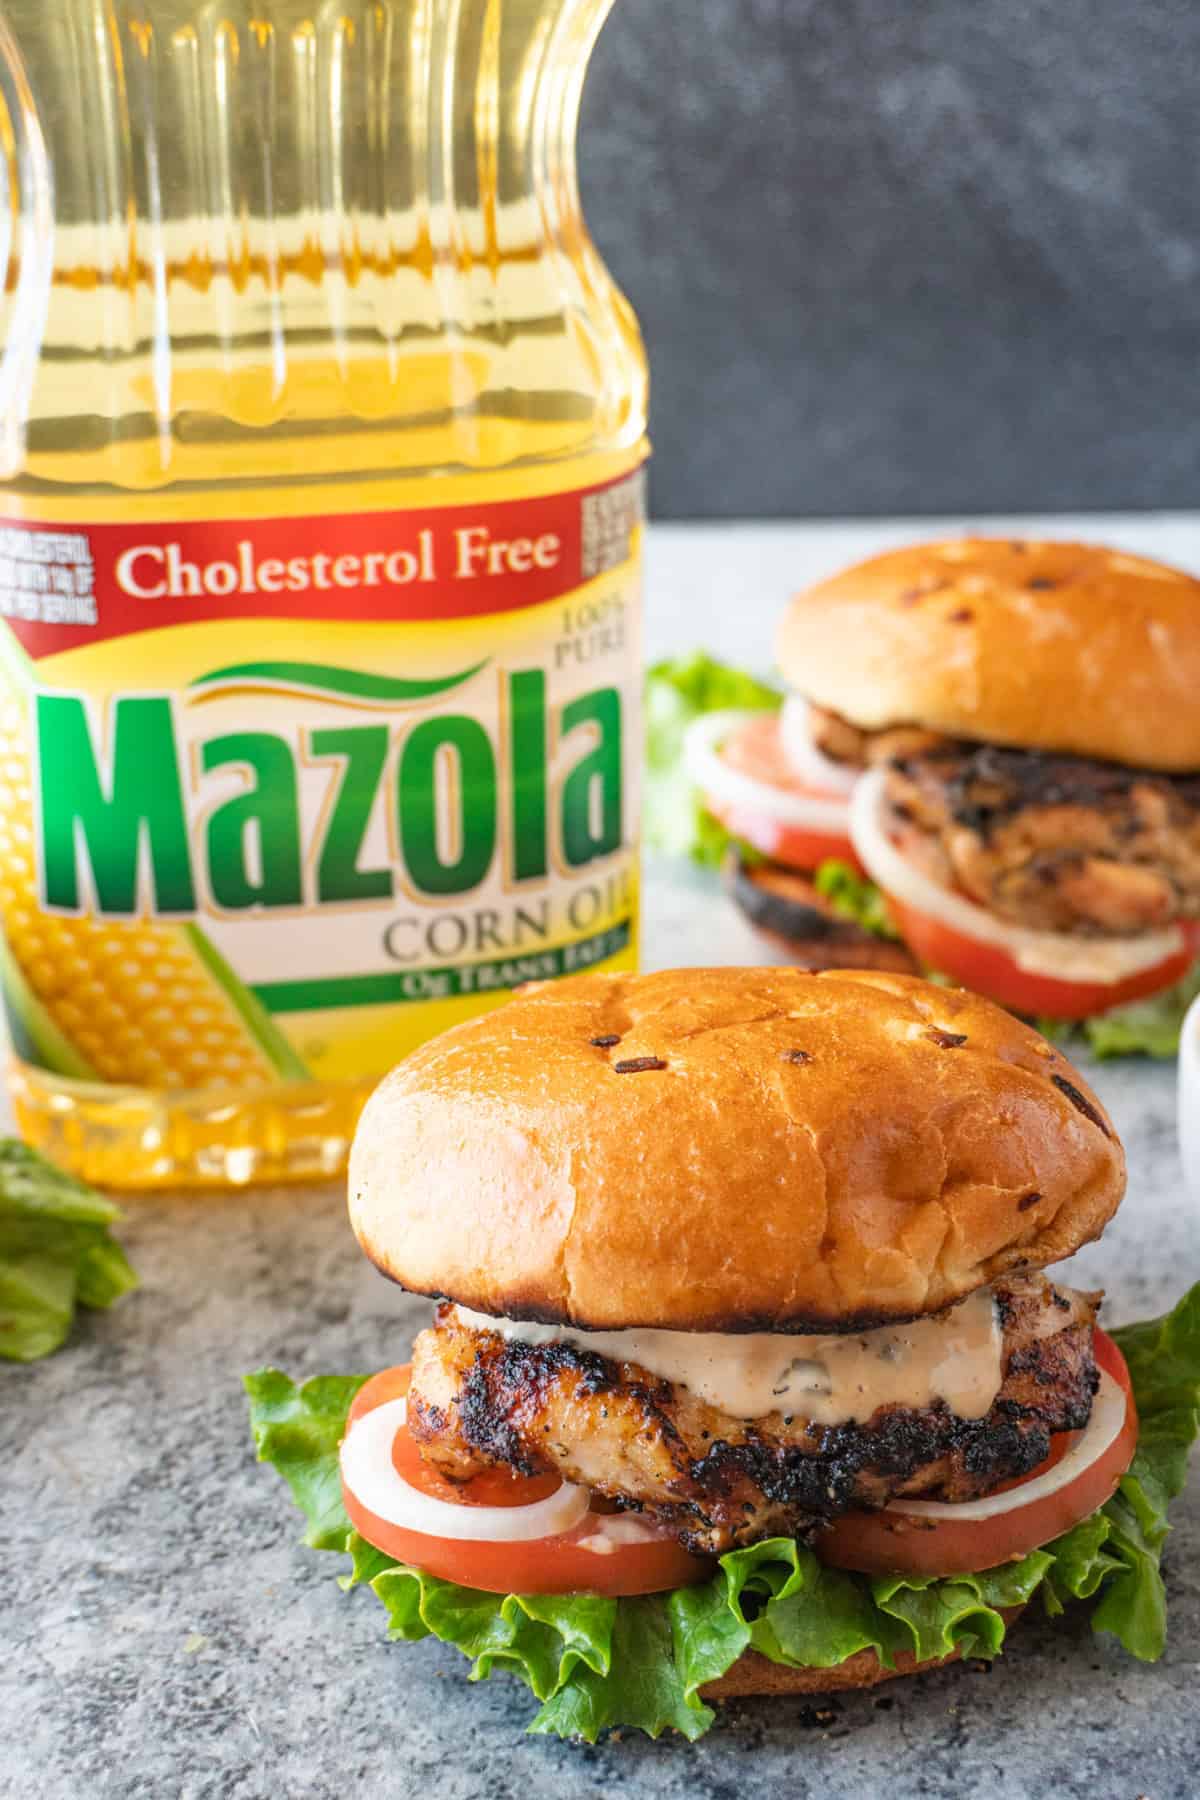 Grilled Chicken Sandwich with Mazola Corn Oil Bottle in background